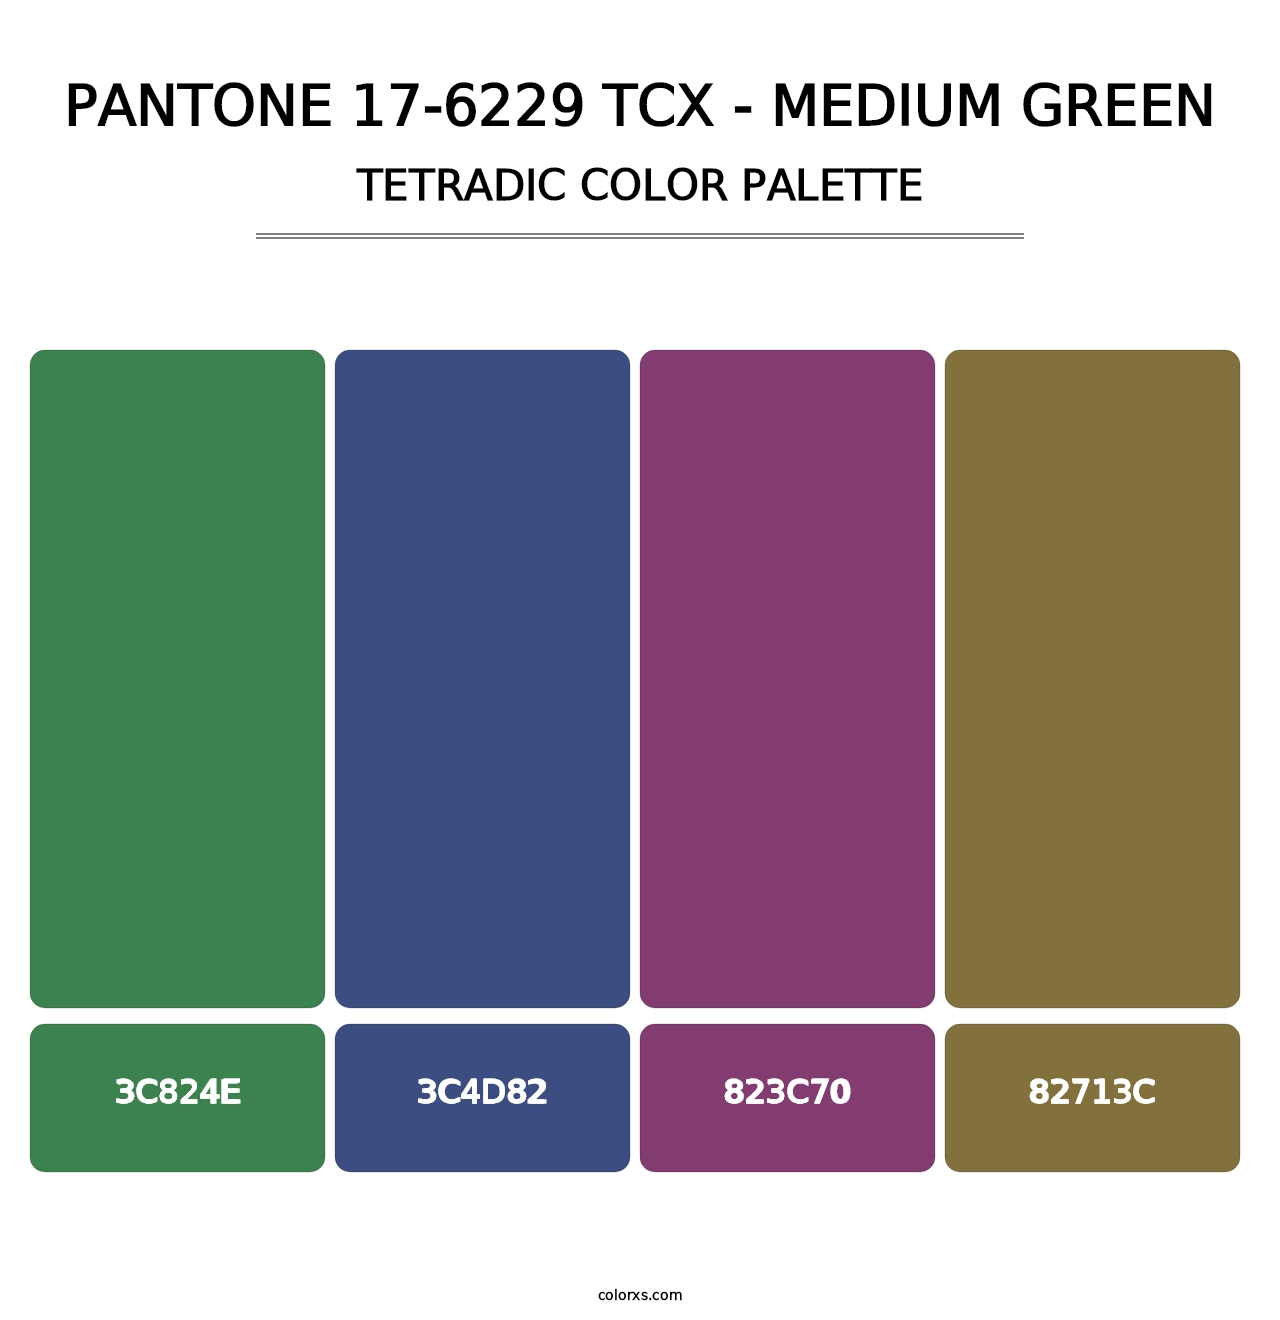 PANTONE 17-6229 TCX - Medium Green - Tetradic Color Palette